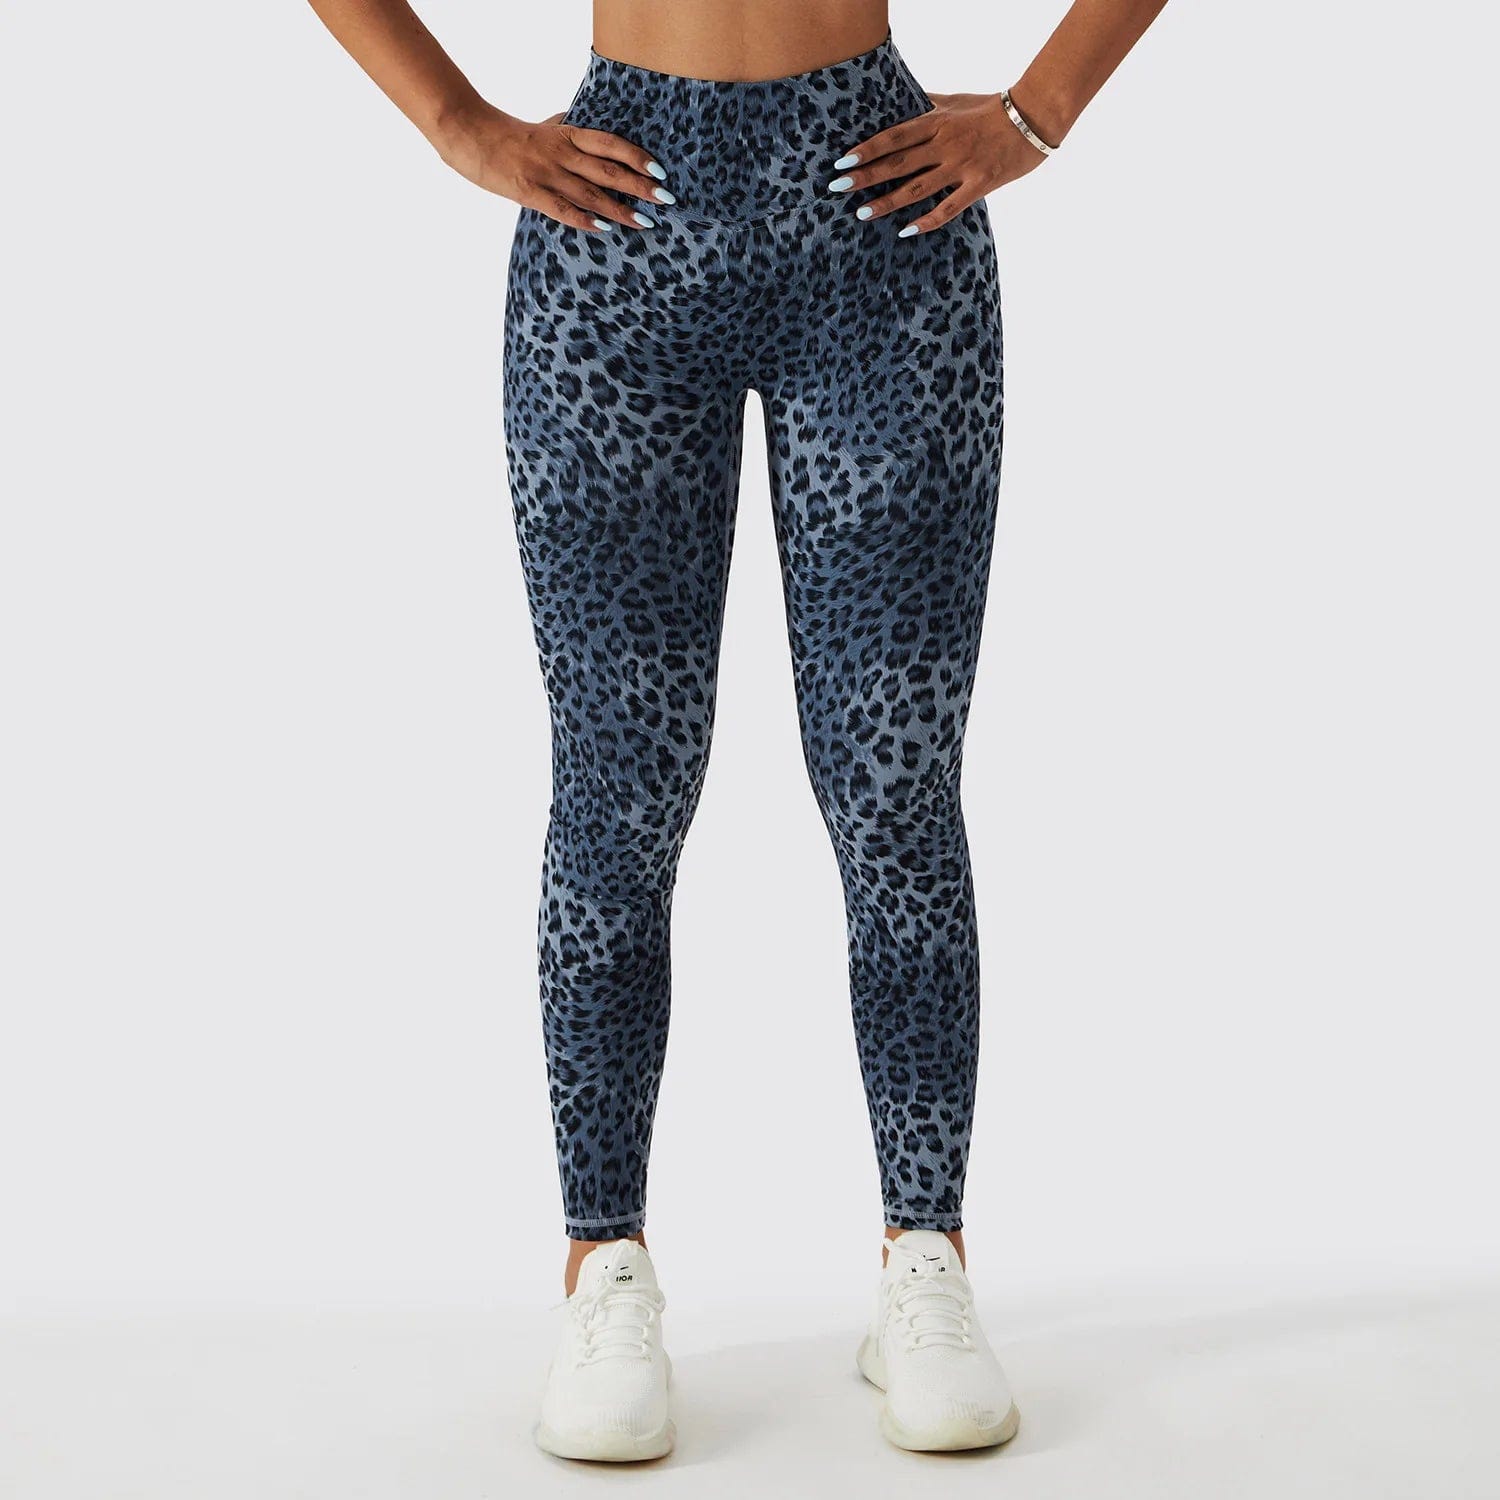 Leopard clothing Indigo blue / M / China Cheetah print gym leggings